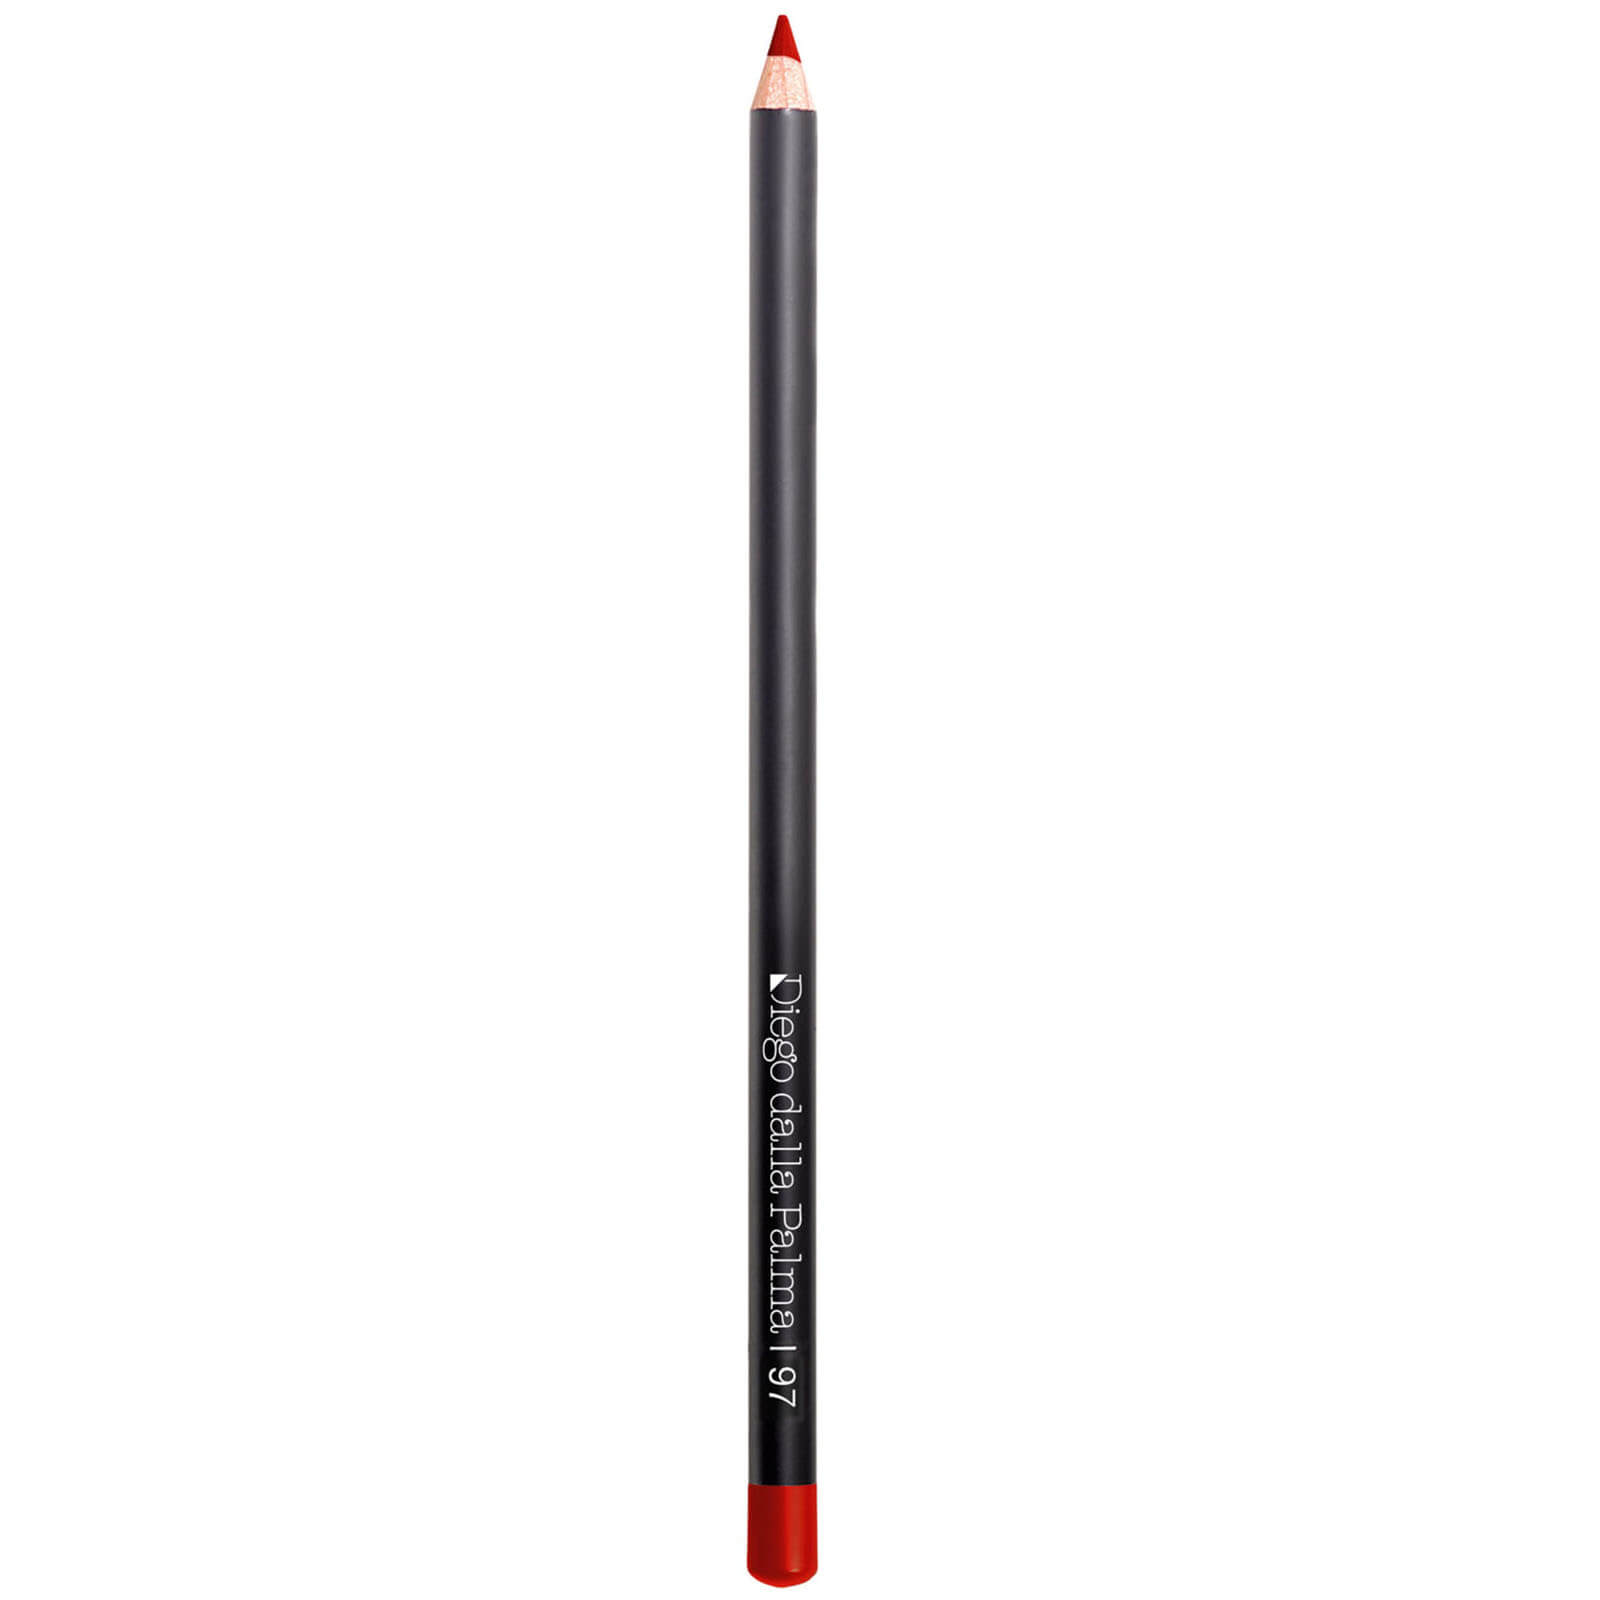 Diego Dalla Palma Lip Pencil 1.5g (Various Shades) - 97 Bordeaux